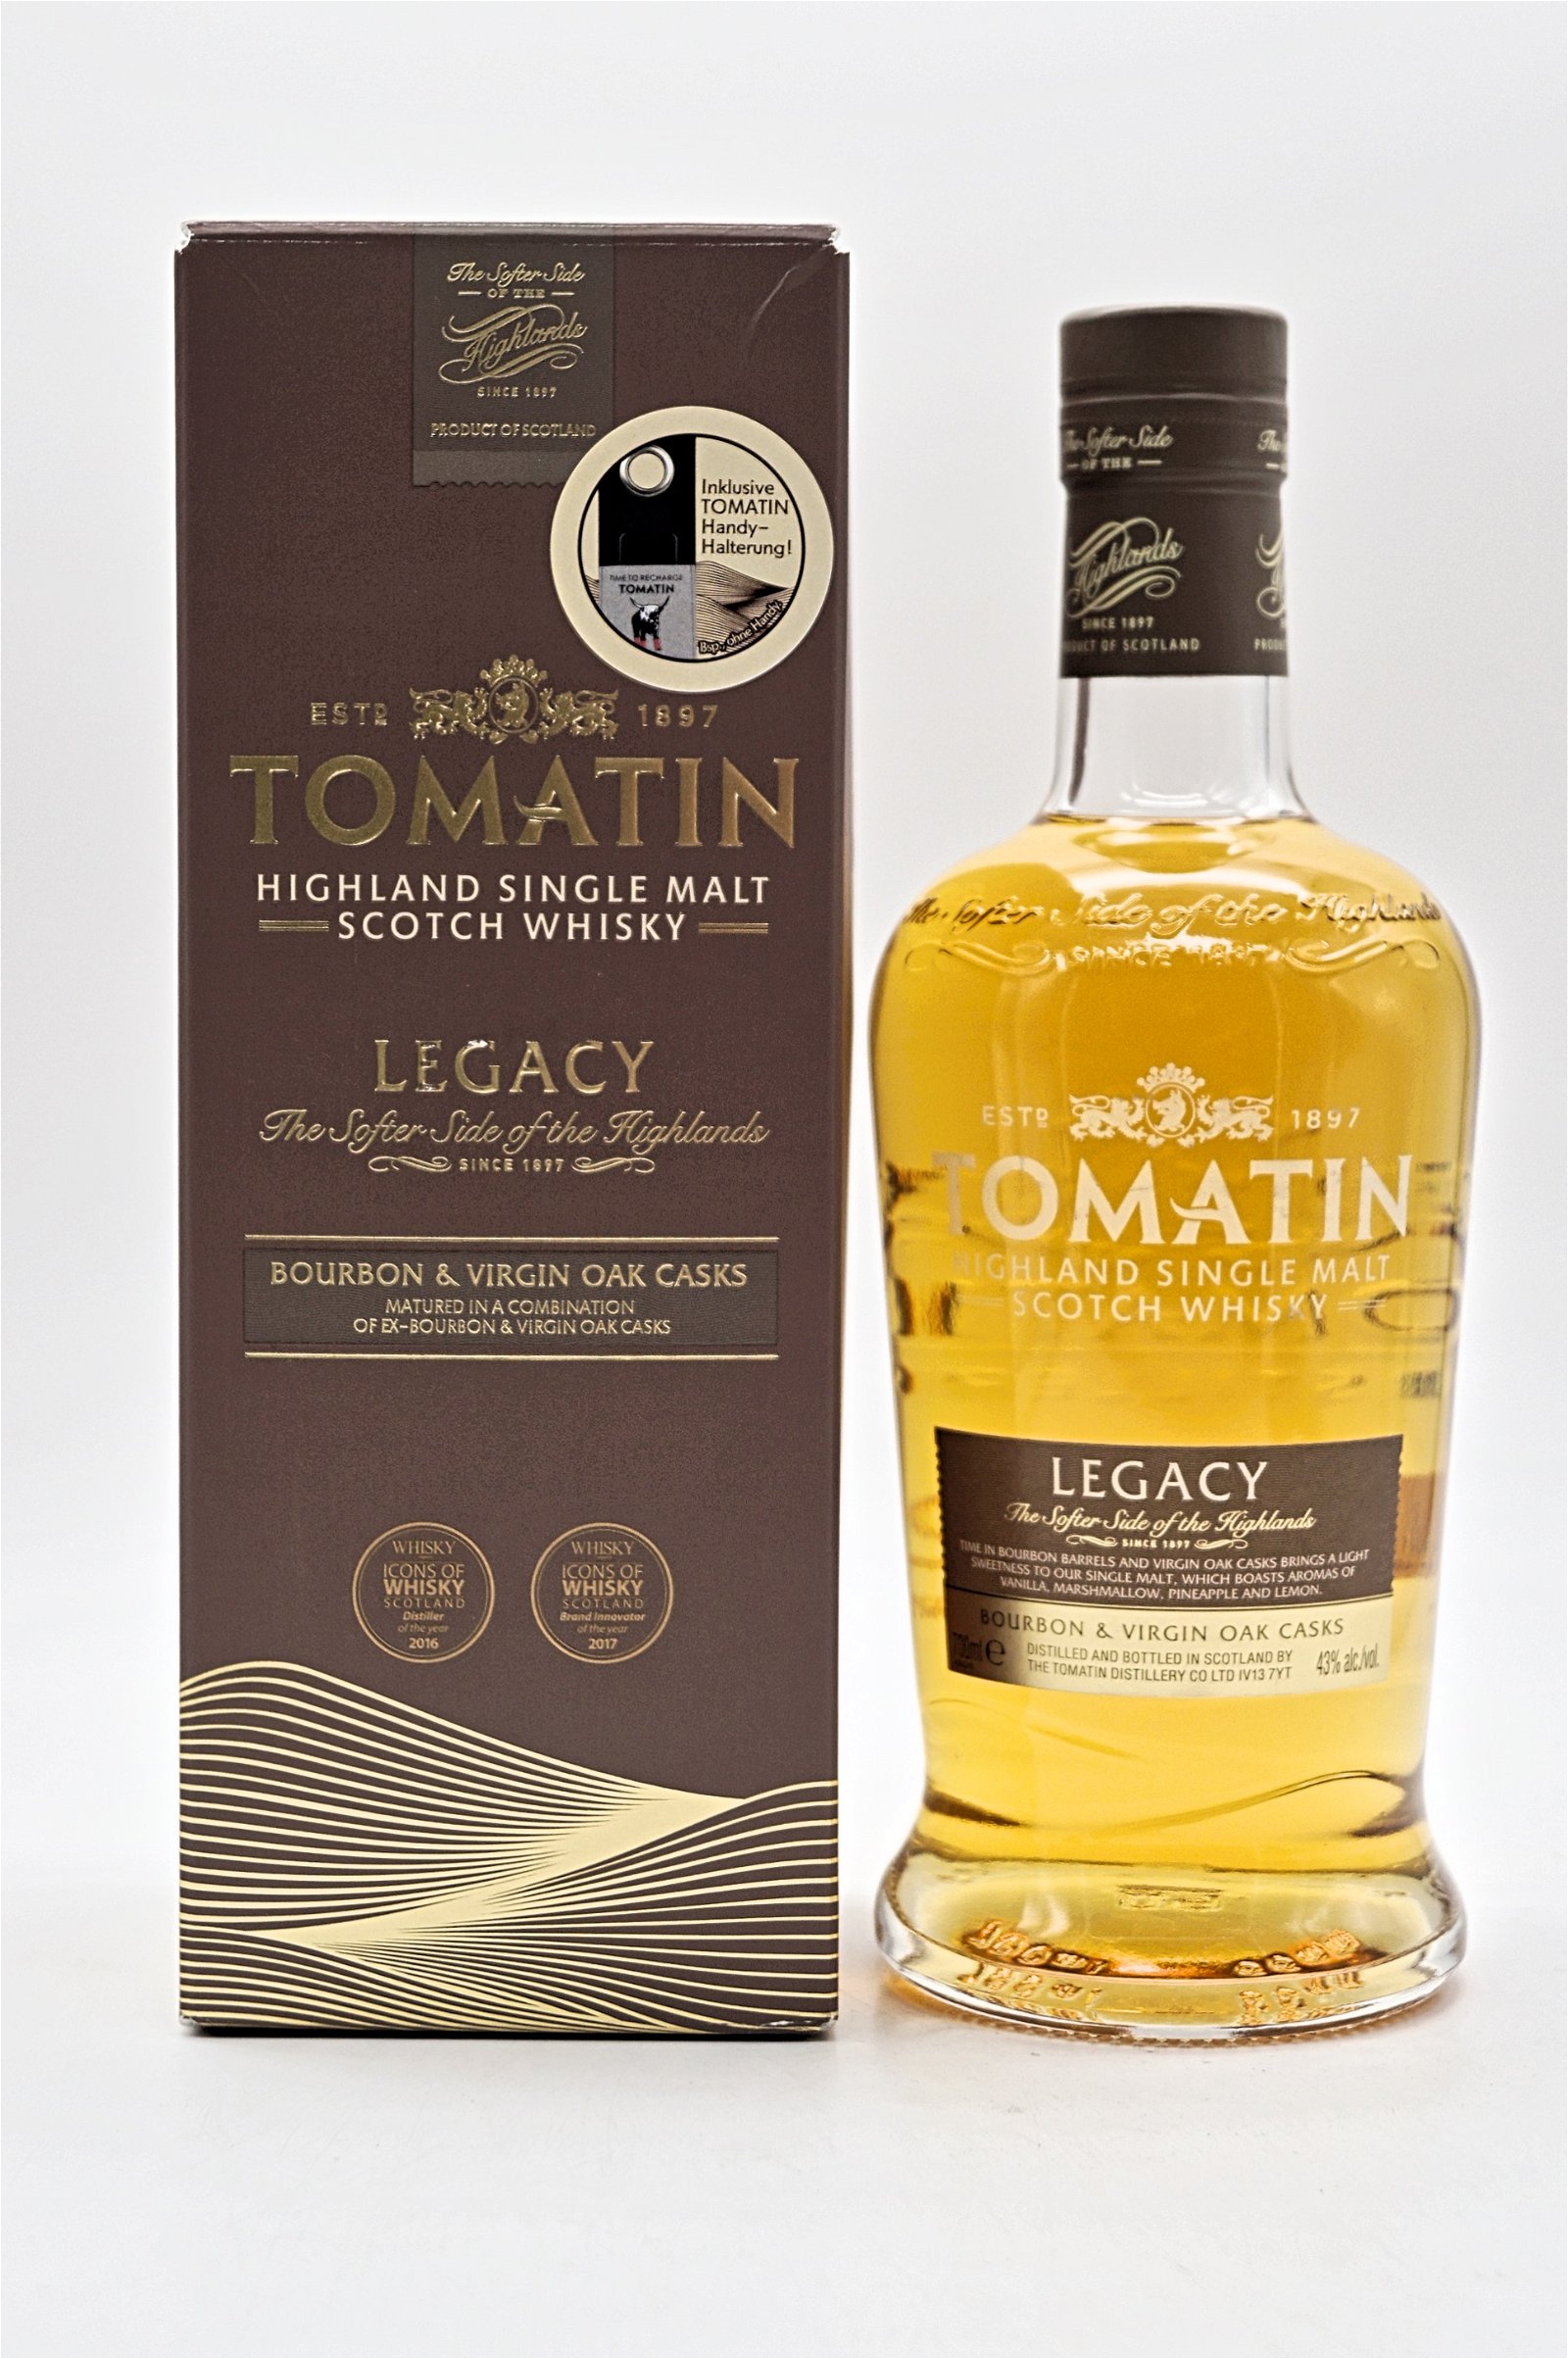 Tomatin Legacy Single Highland Malt Scotch Whisky